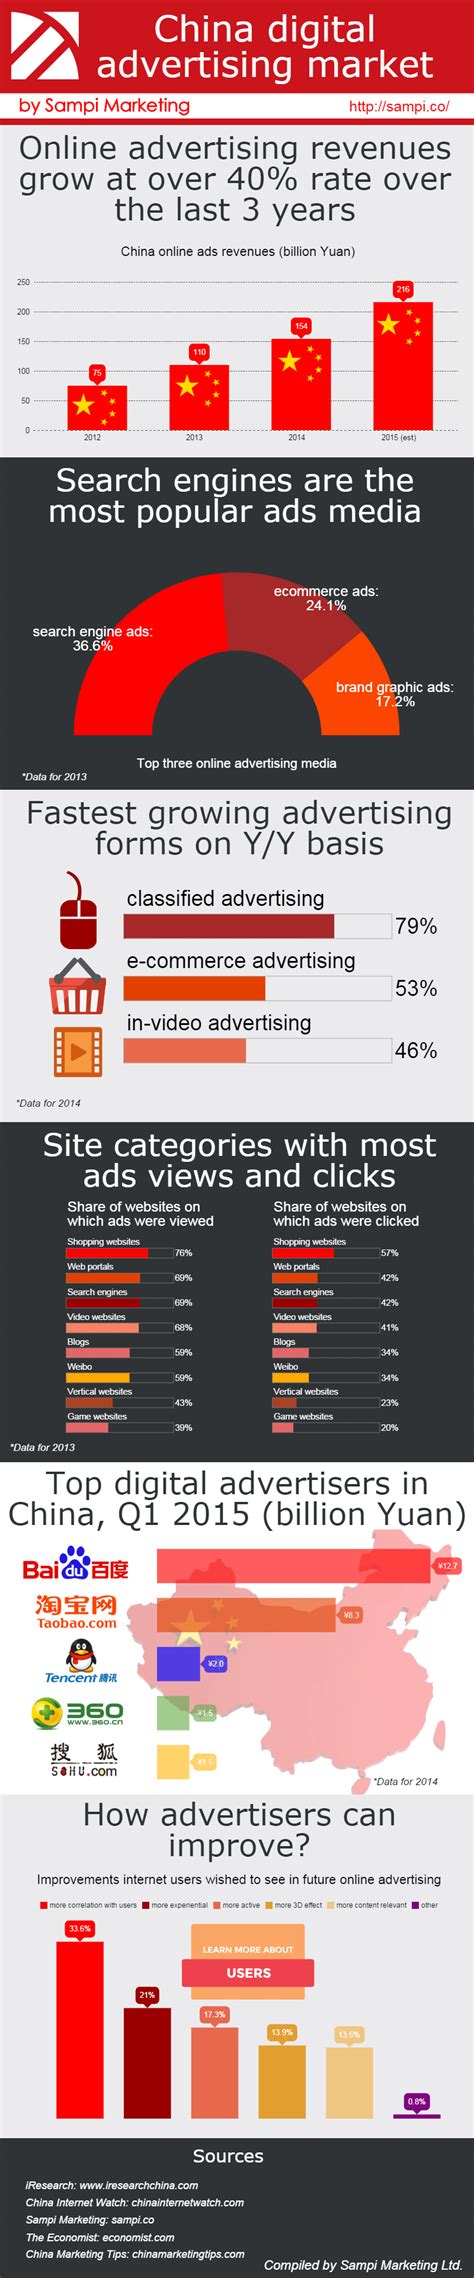 china digital advertising market infographic